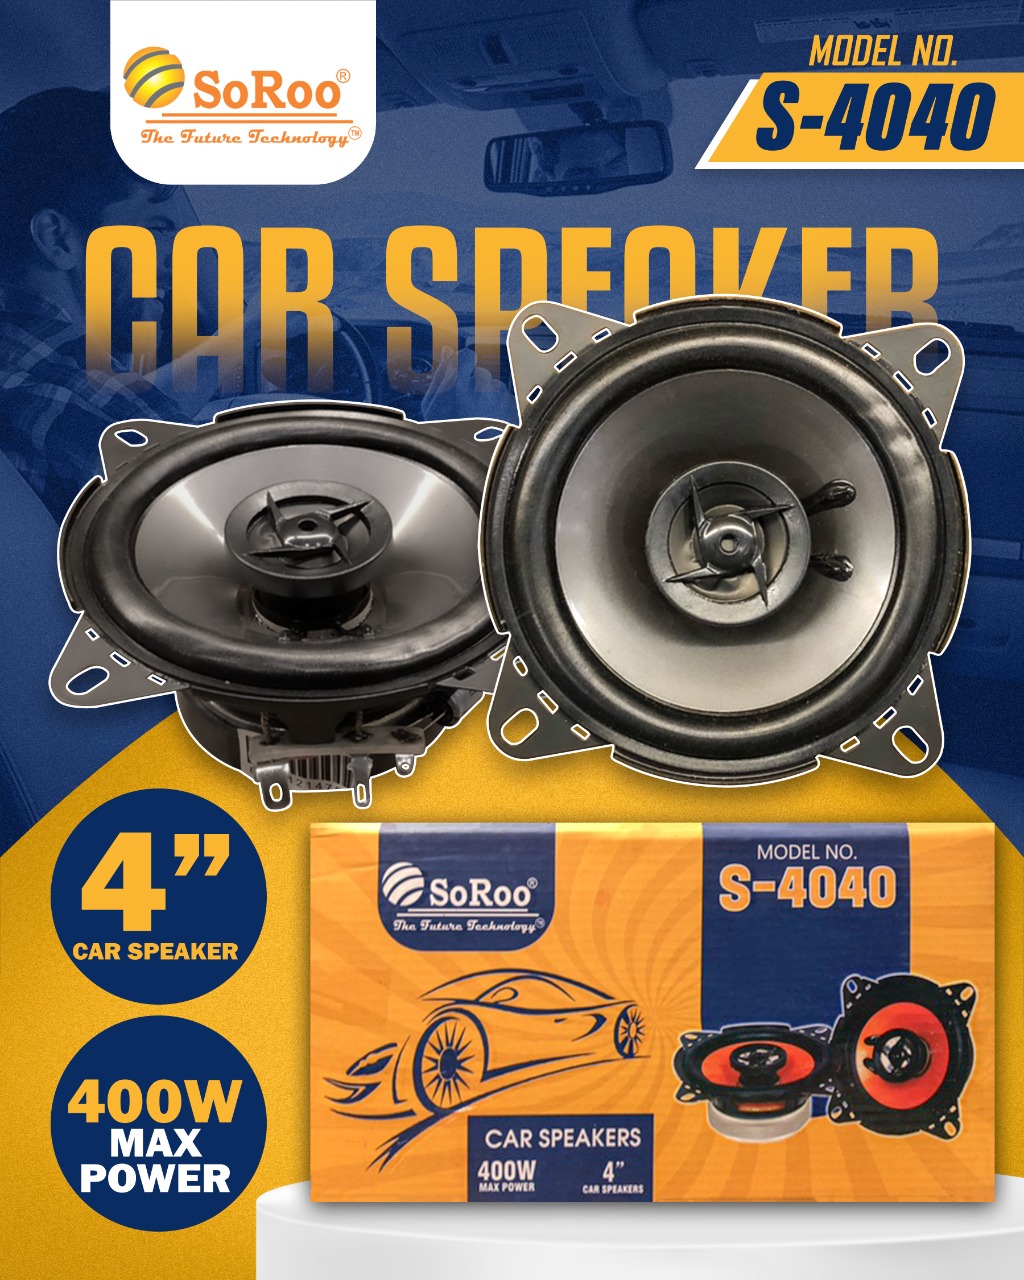 Soroo Car Speaker 4 inch 400 w